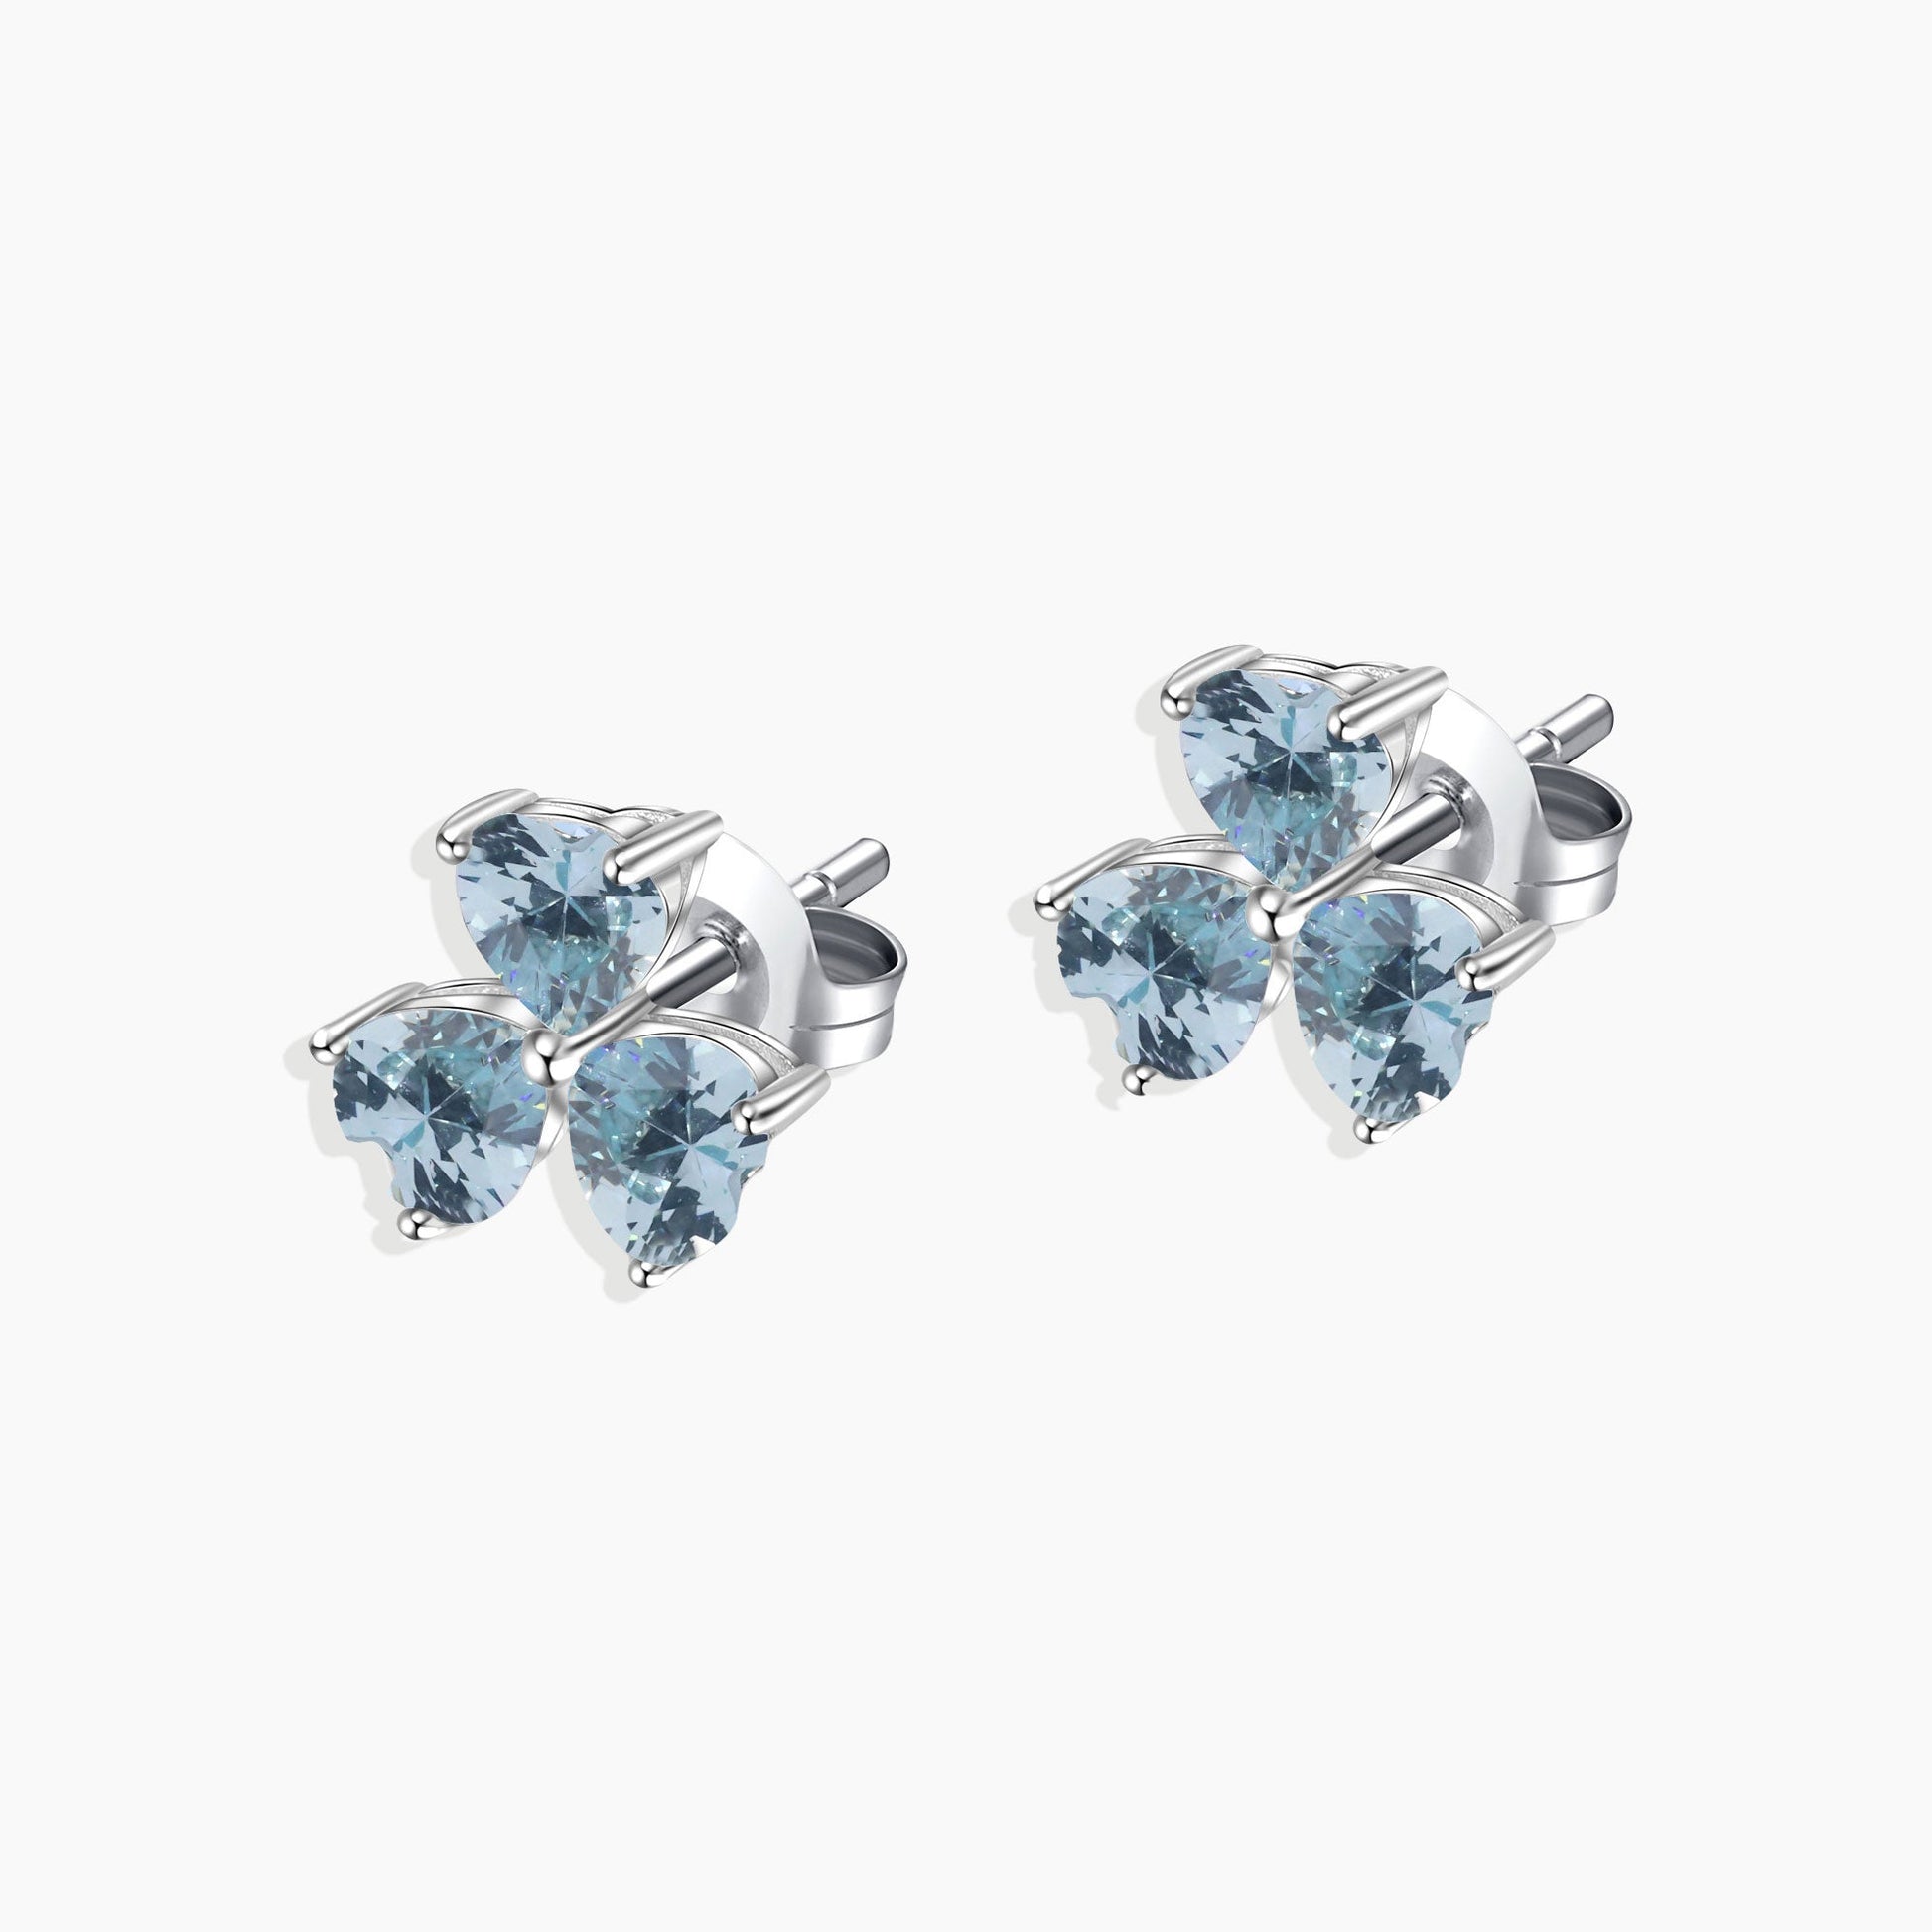 Flower Shape Stud Earrings in Sterling Silver -  Aquamarine